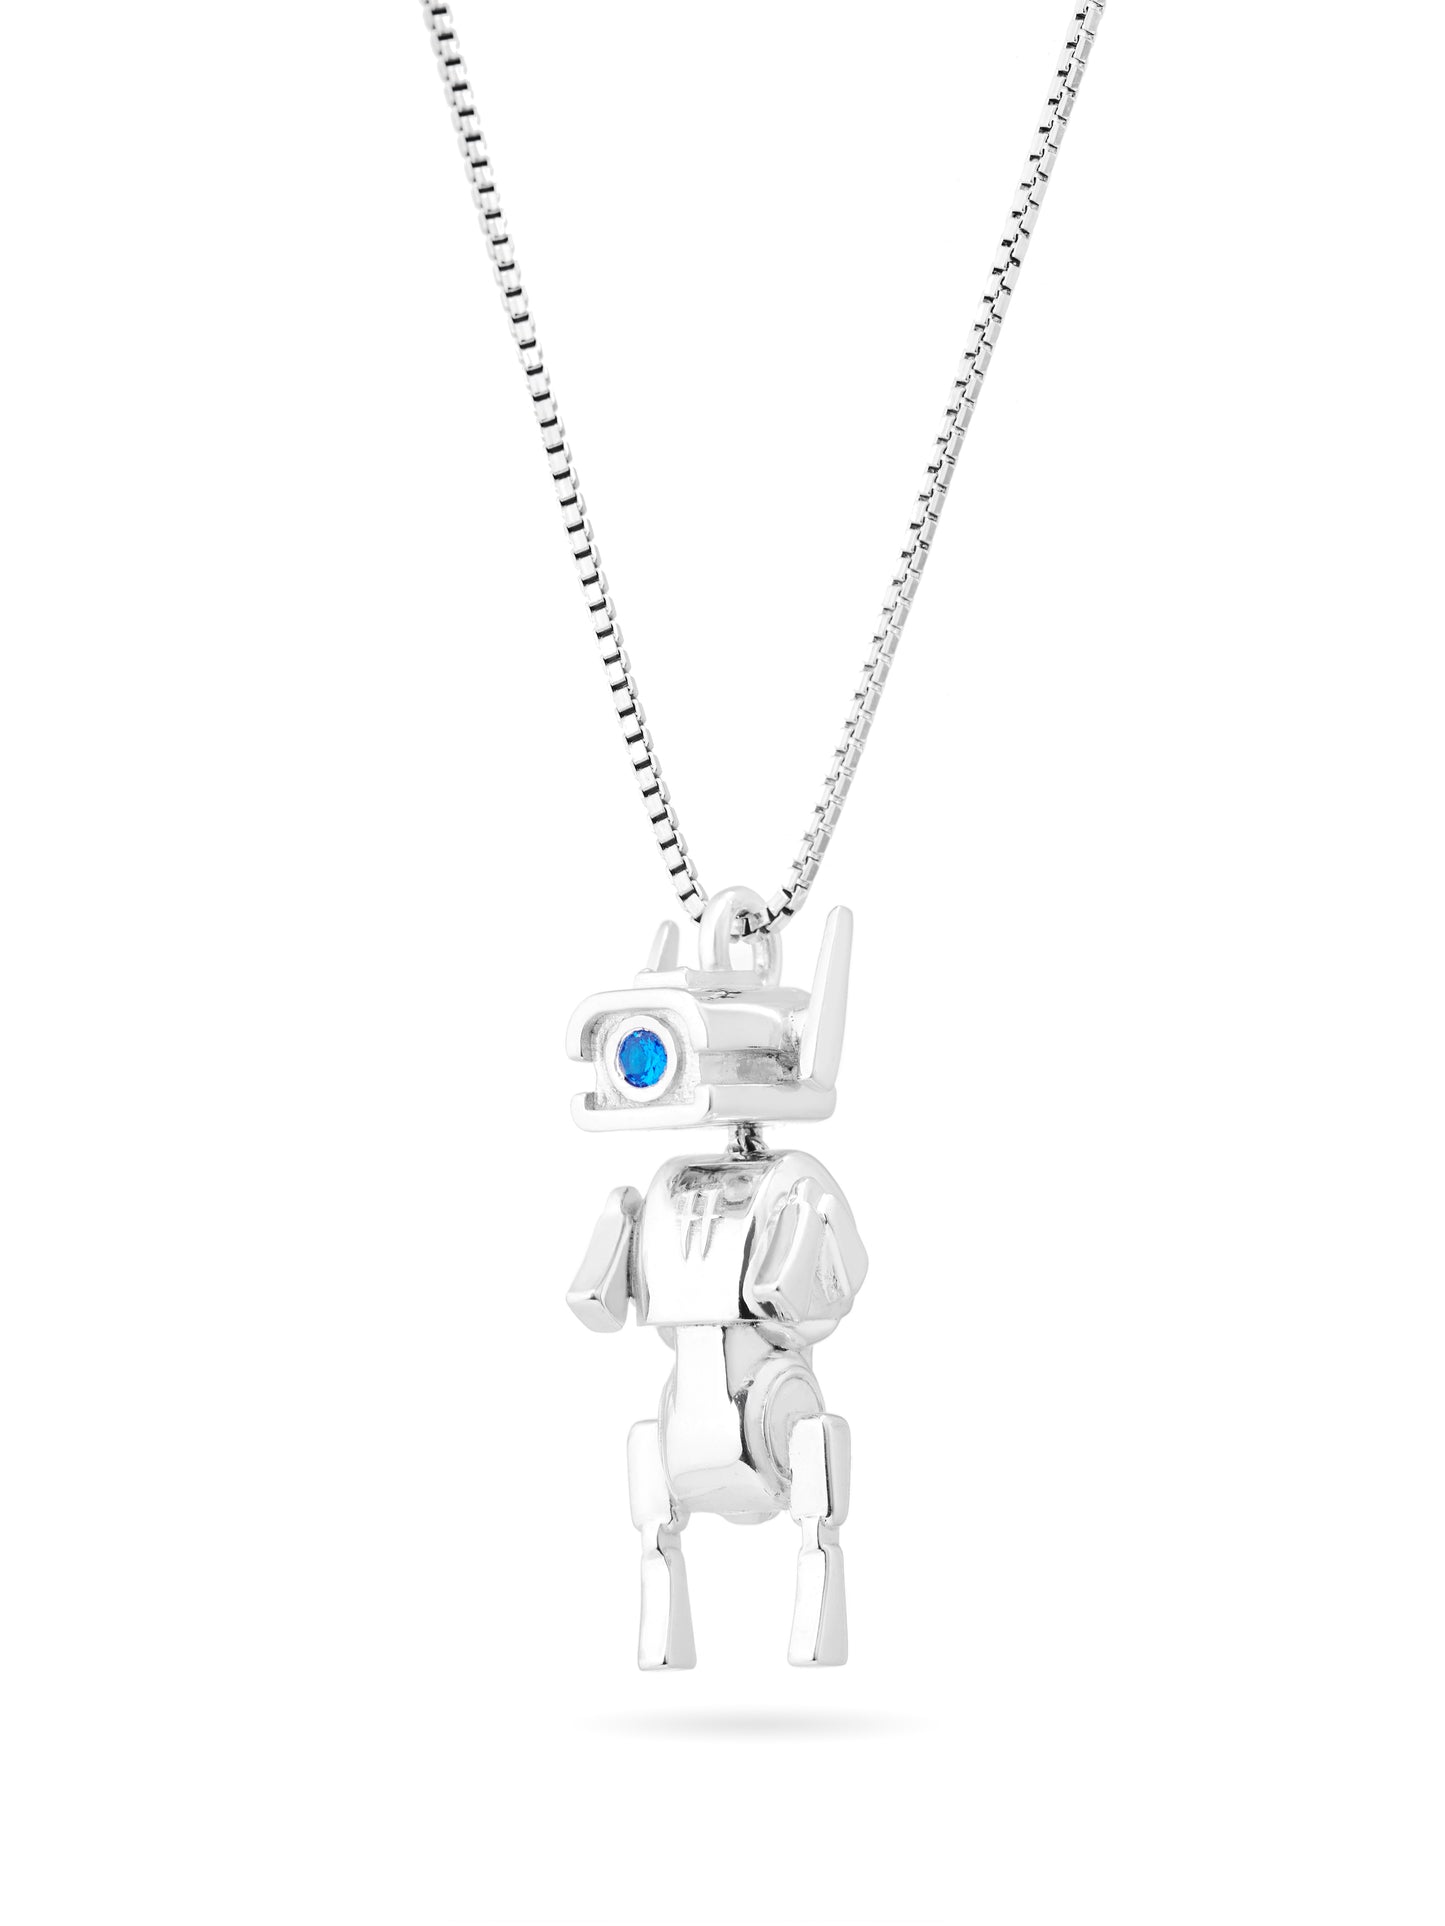 Robot Dog Necklace - Large (Silver)